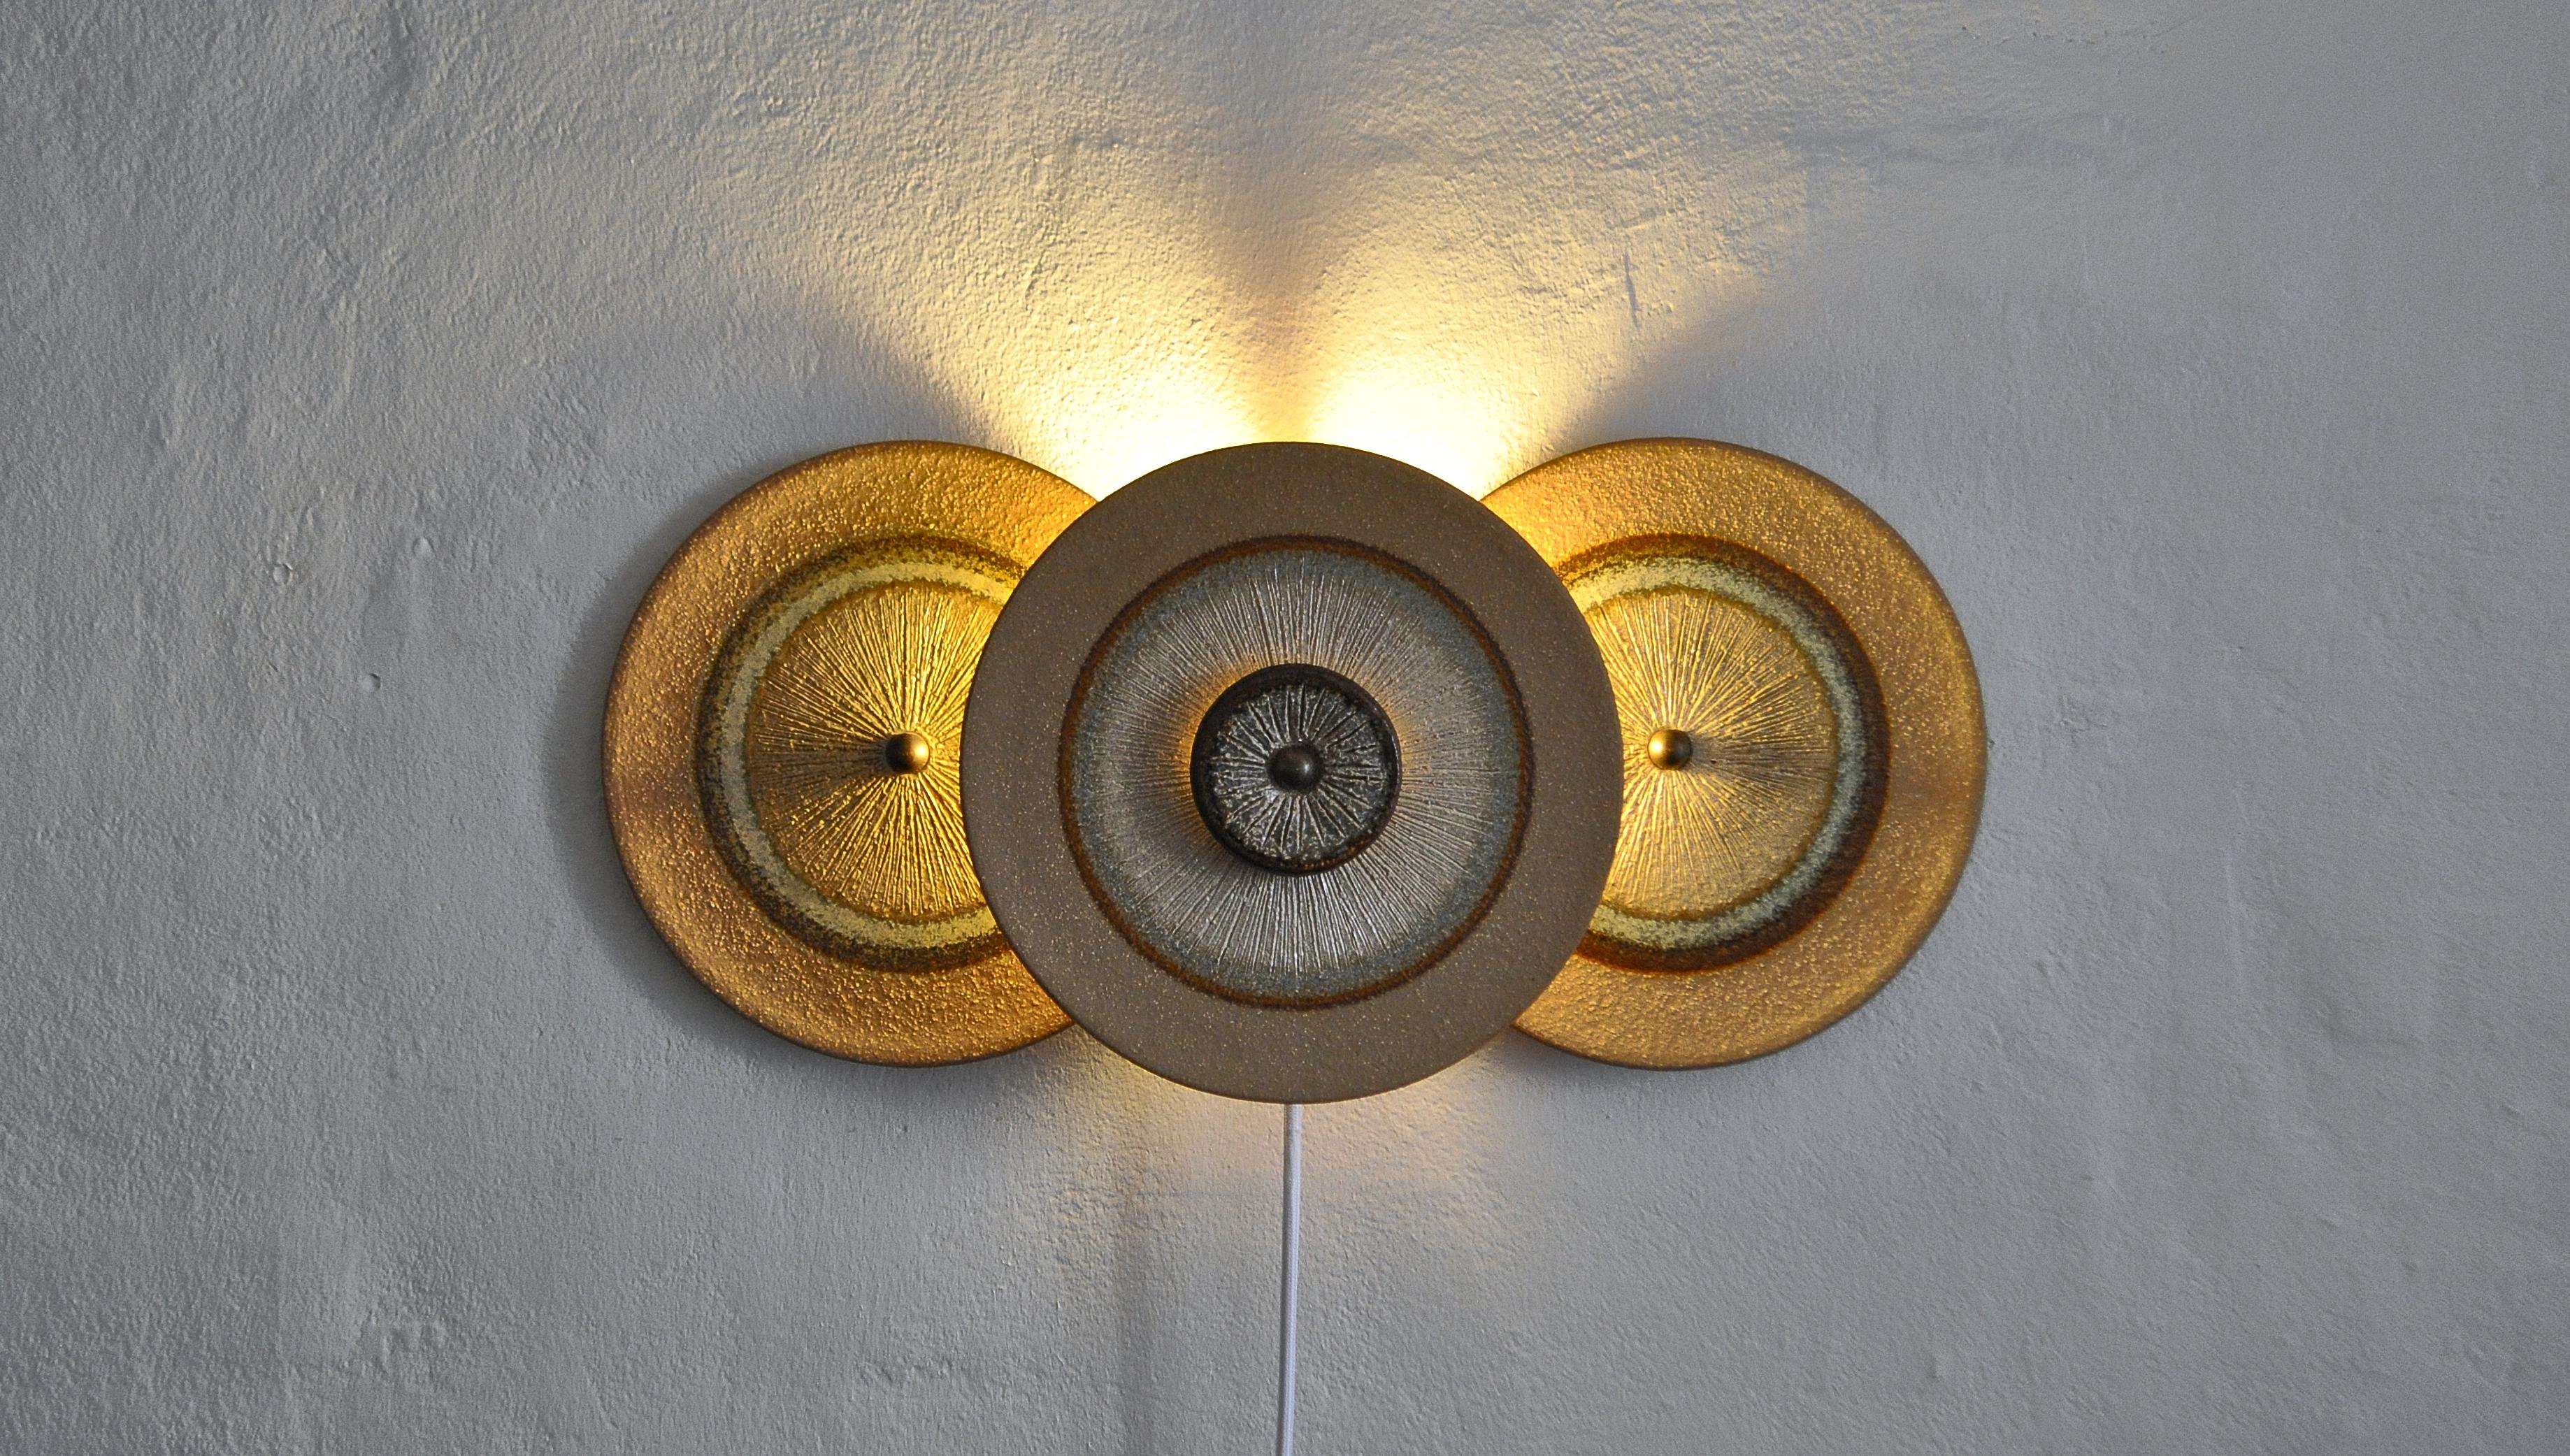 Danish Ceramic Wall Light in Scandinavian Modern Style by Noomi Backhausen for Søholm